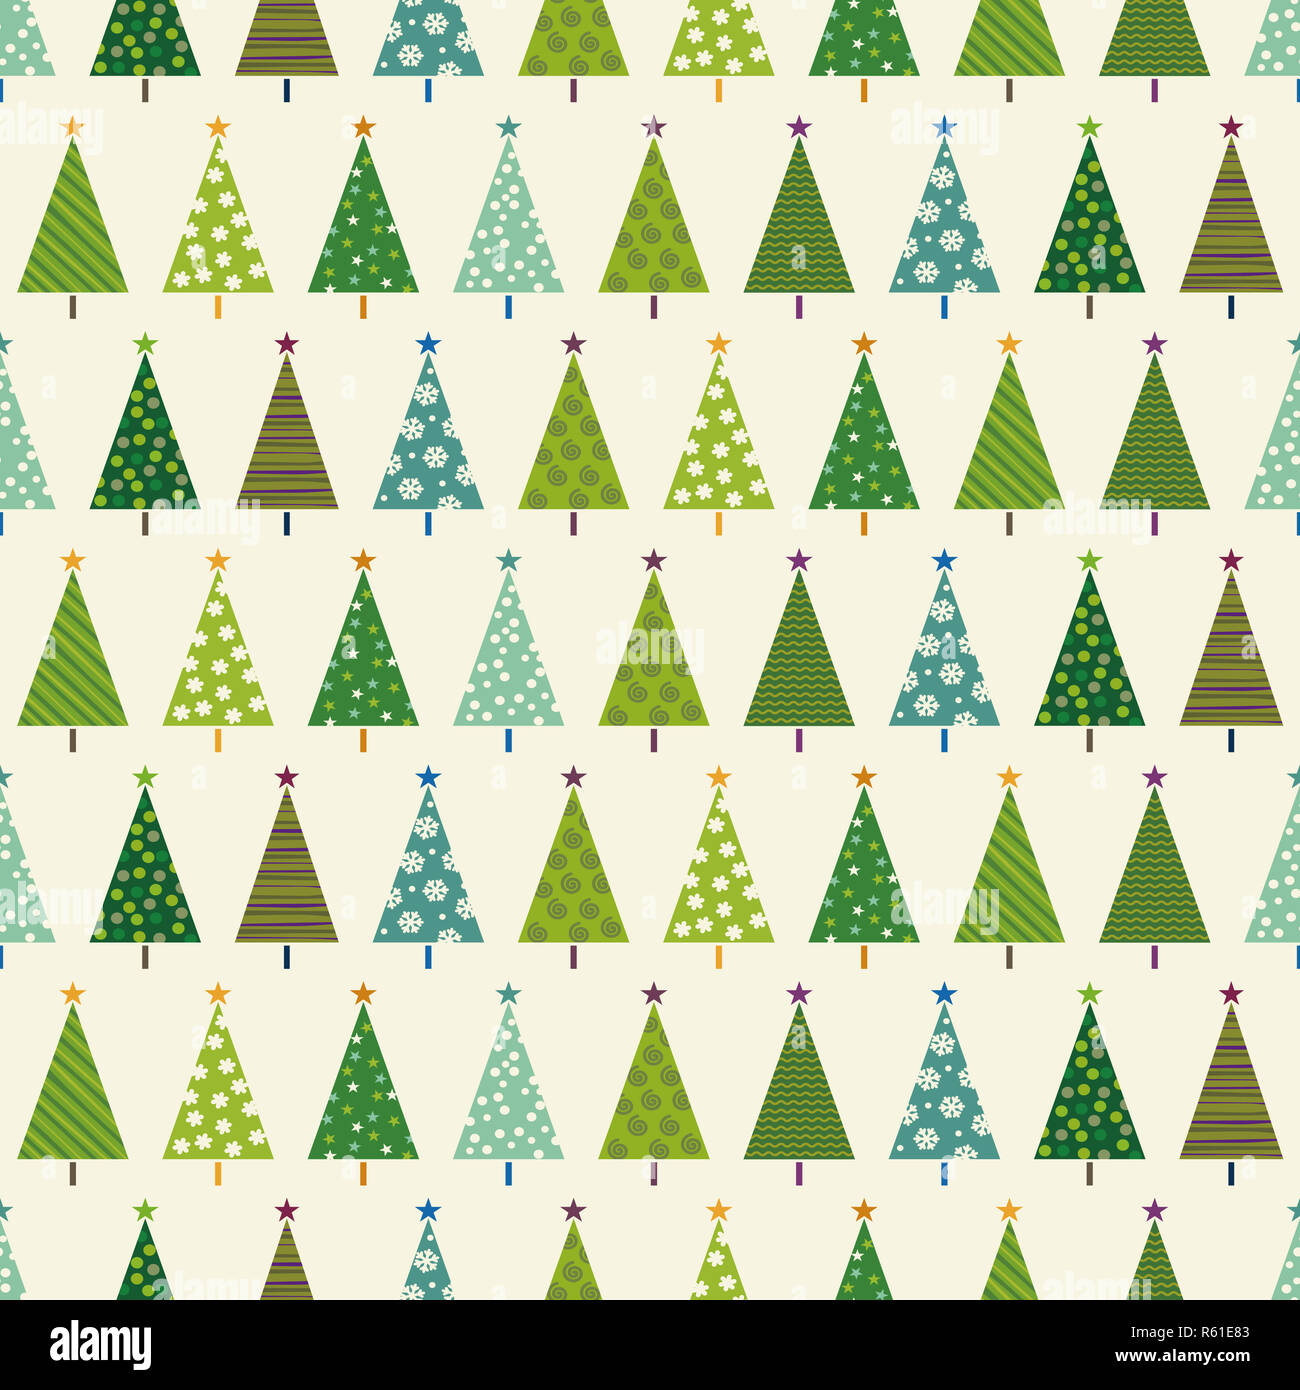 Christmas pattern with Christmas trees Stock Photo - Alamy